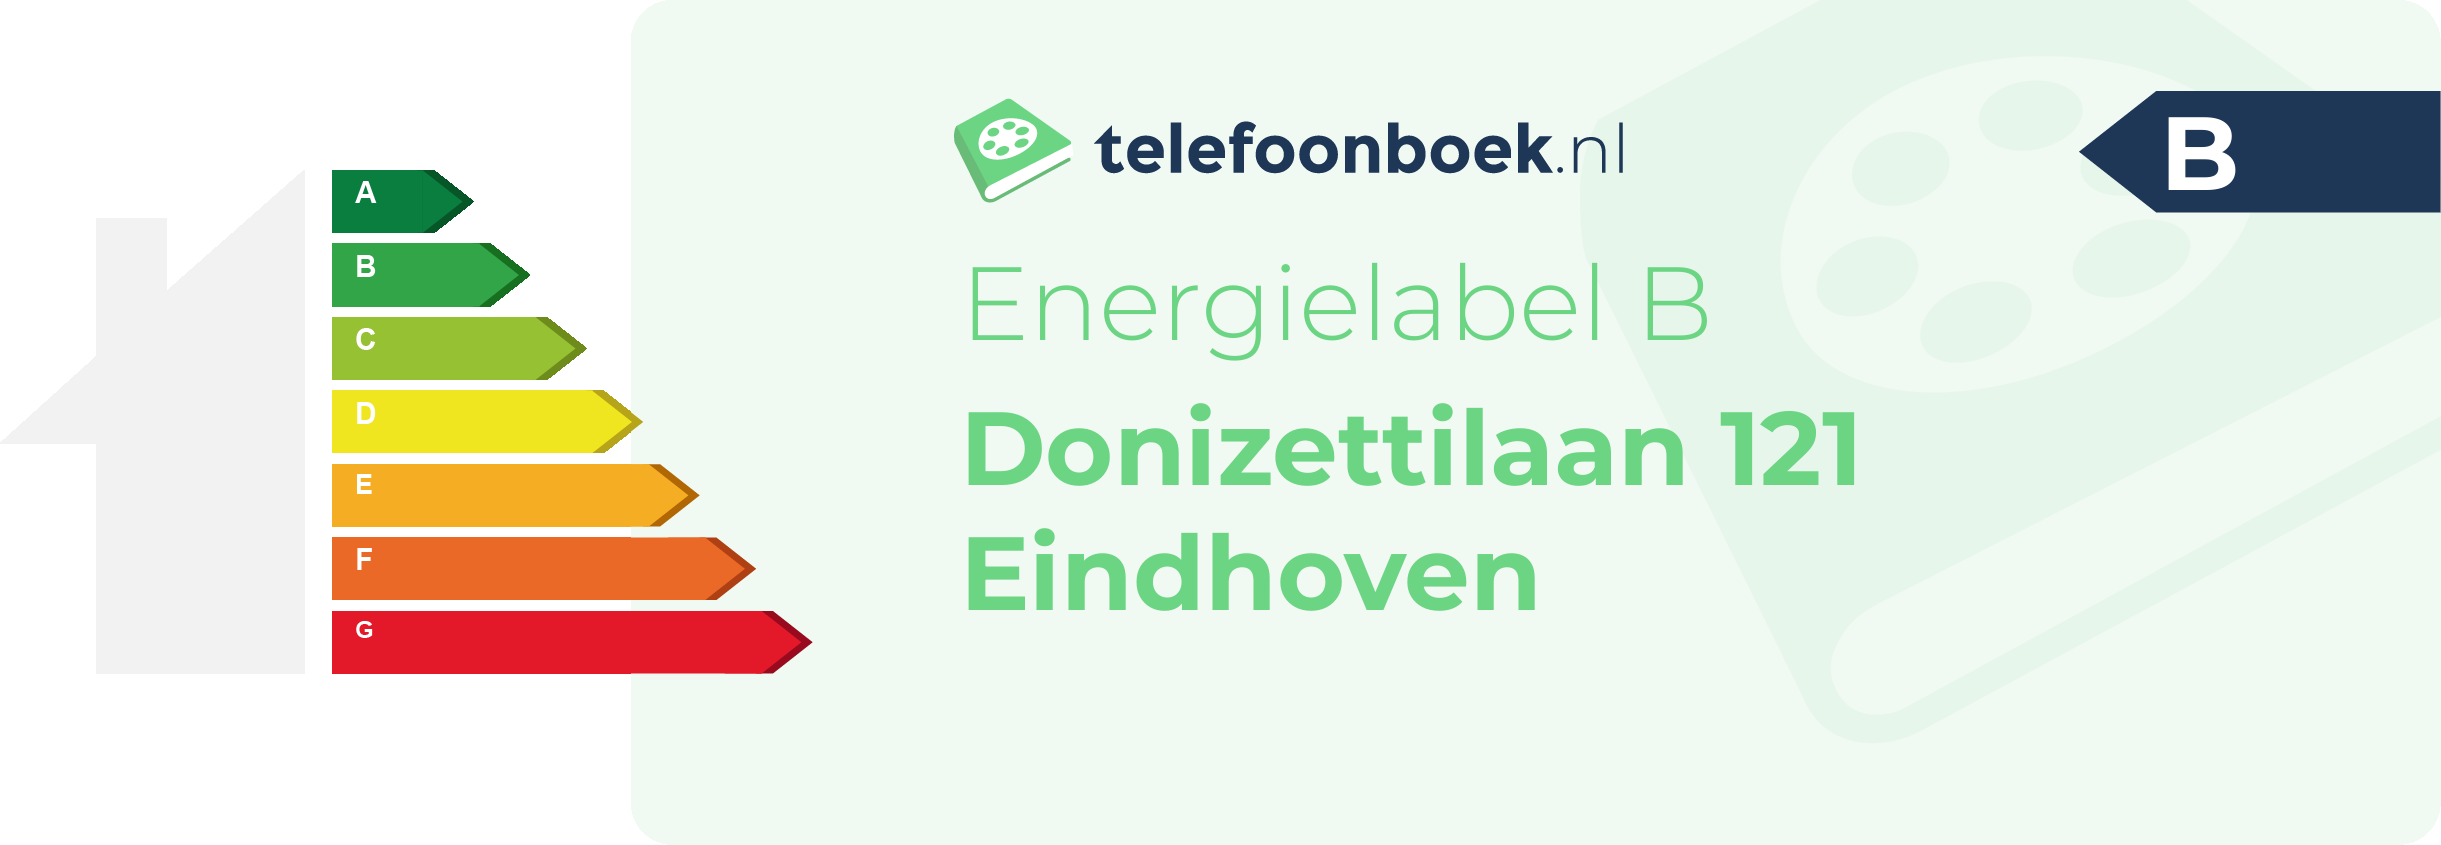 Energielabel Donizettilaan 121 Eindhoven